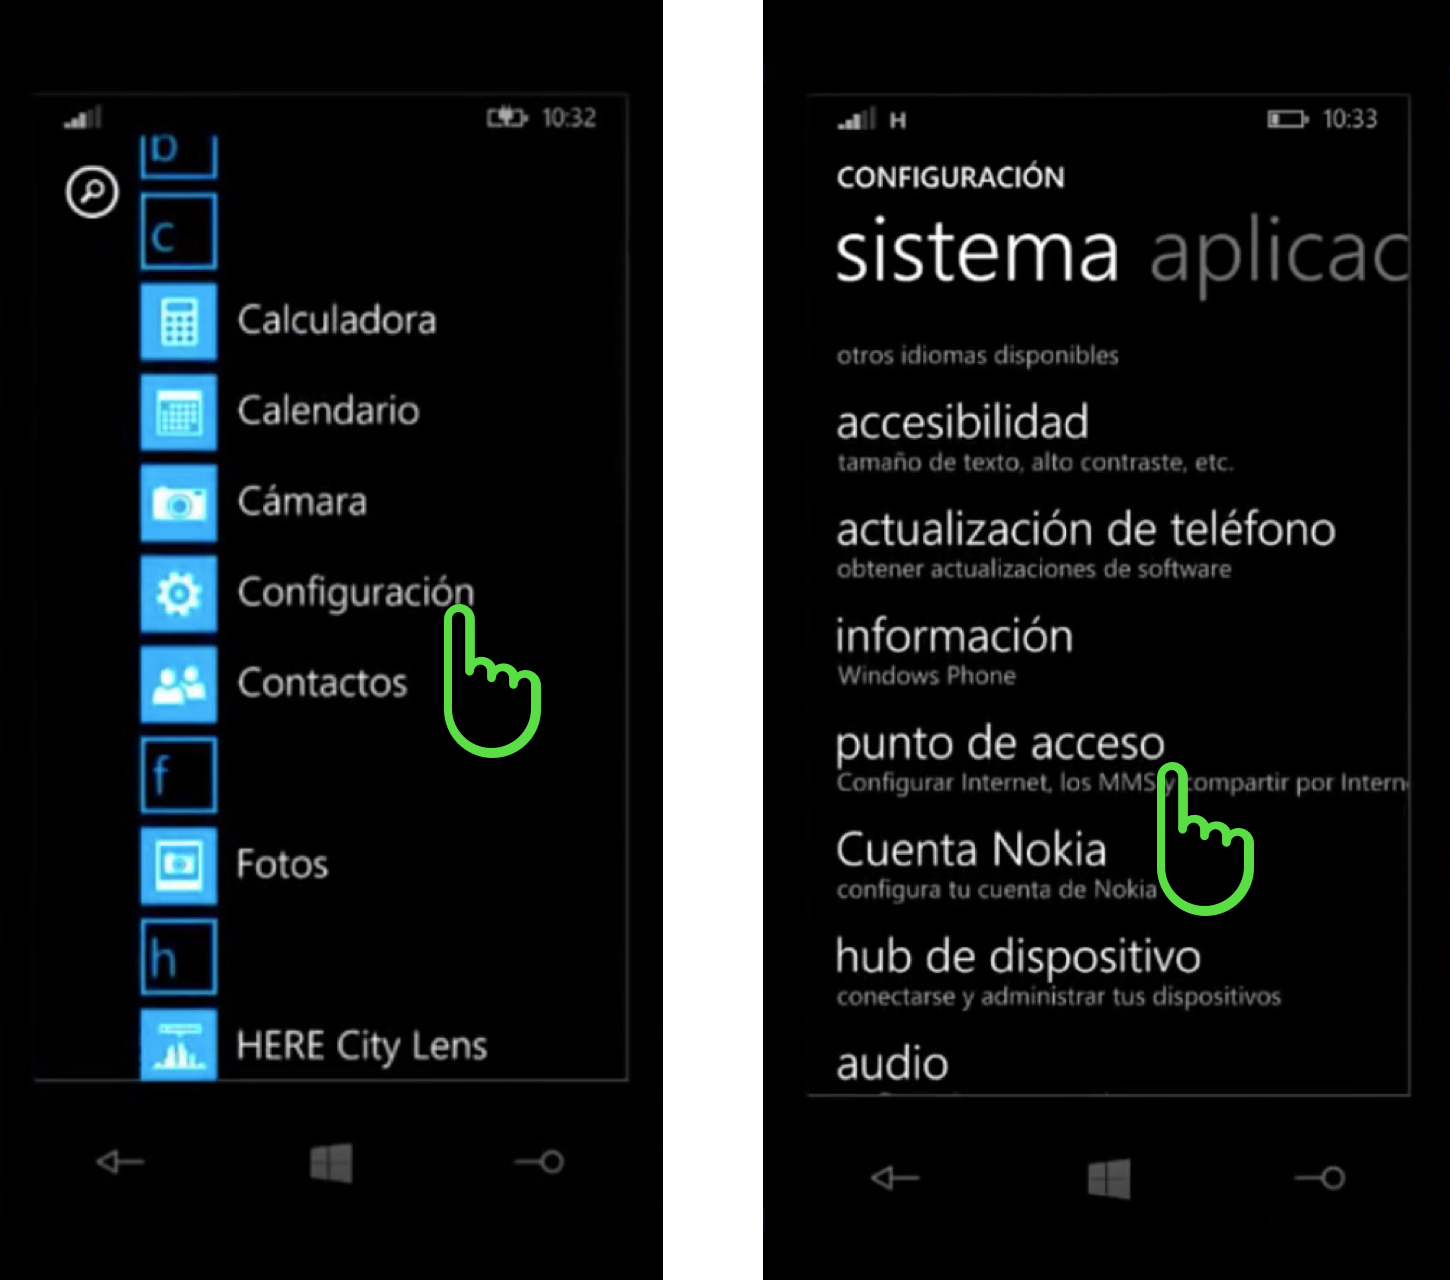 Imagen configuración menú Windows Phone